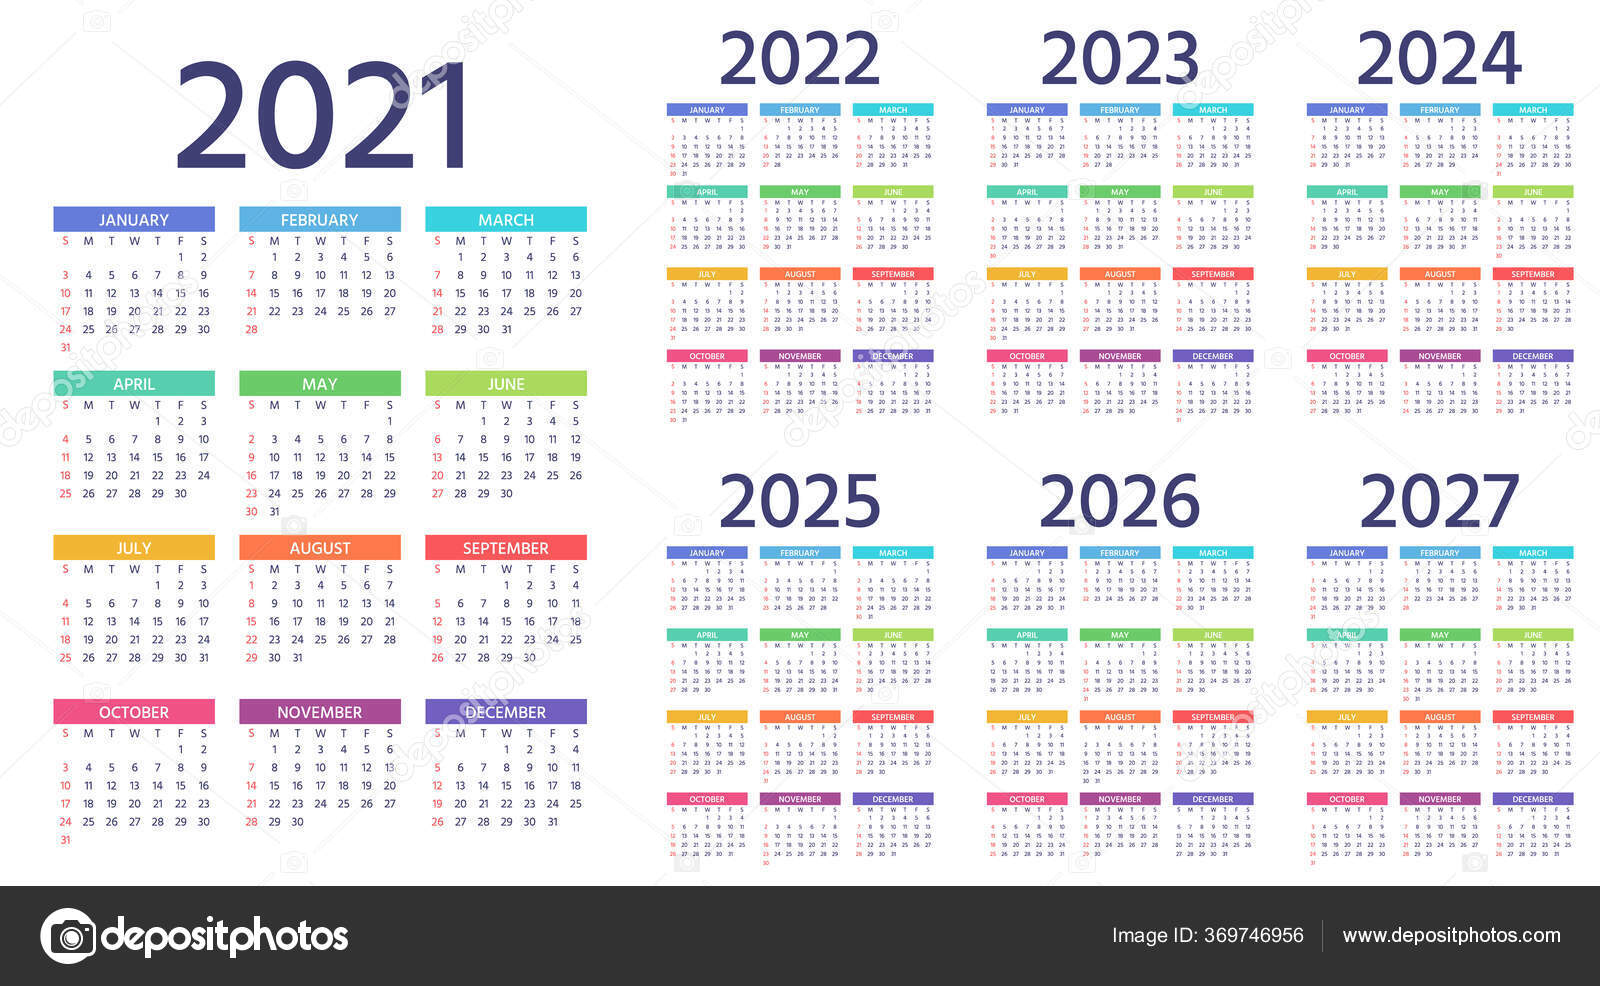 2021 2024 Calendar / Calendar 2021 2022 2023 2024 2025 2026 2020